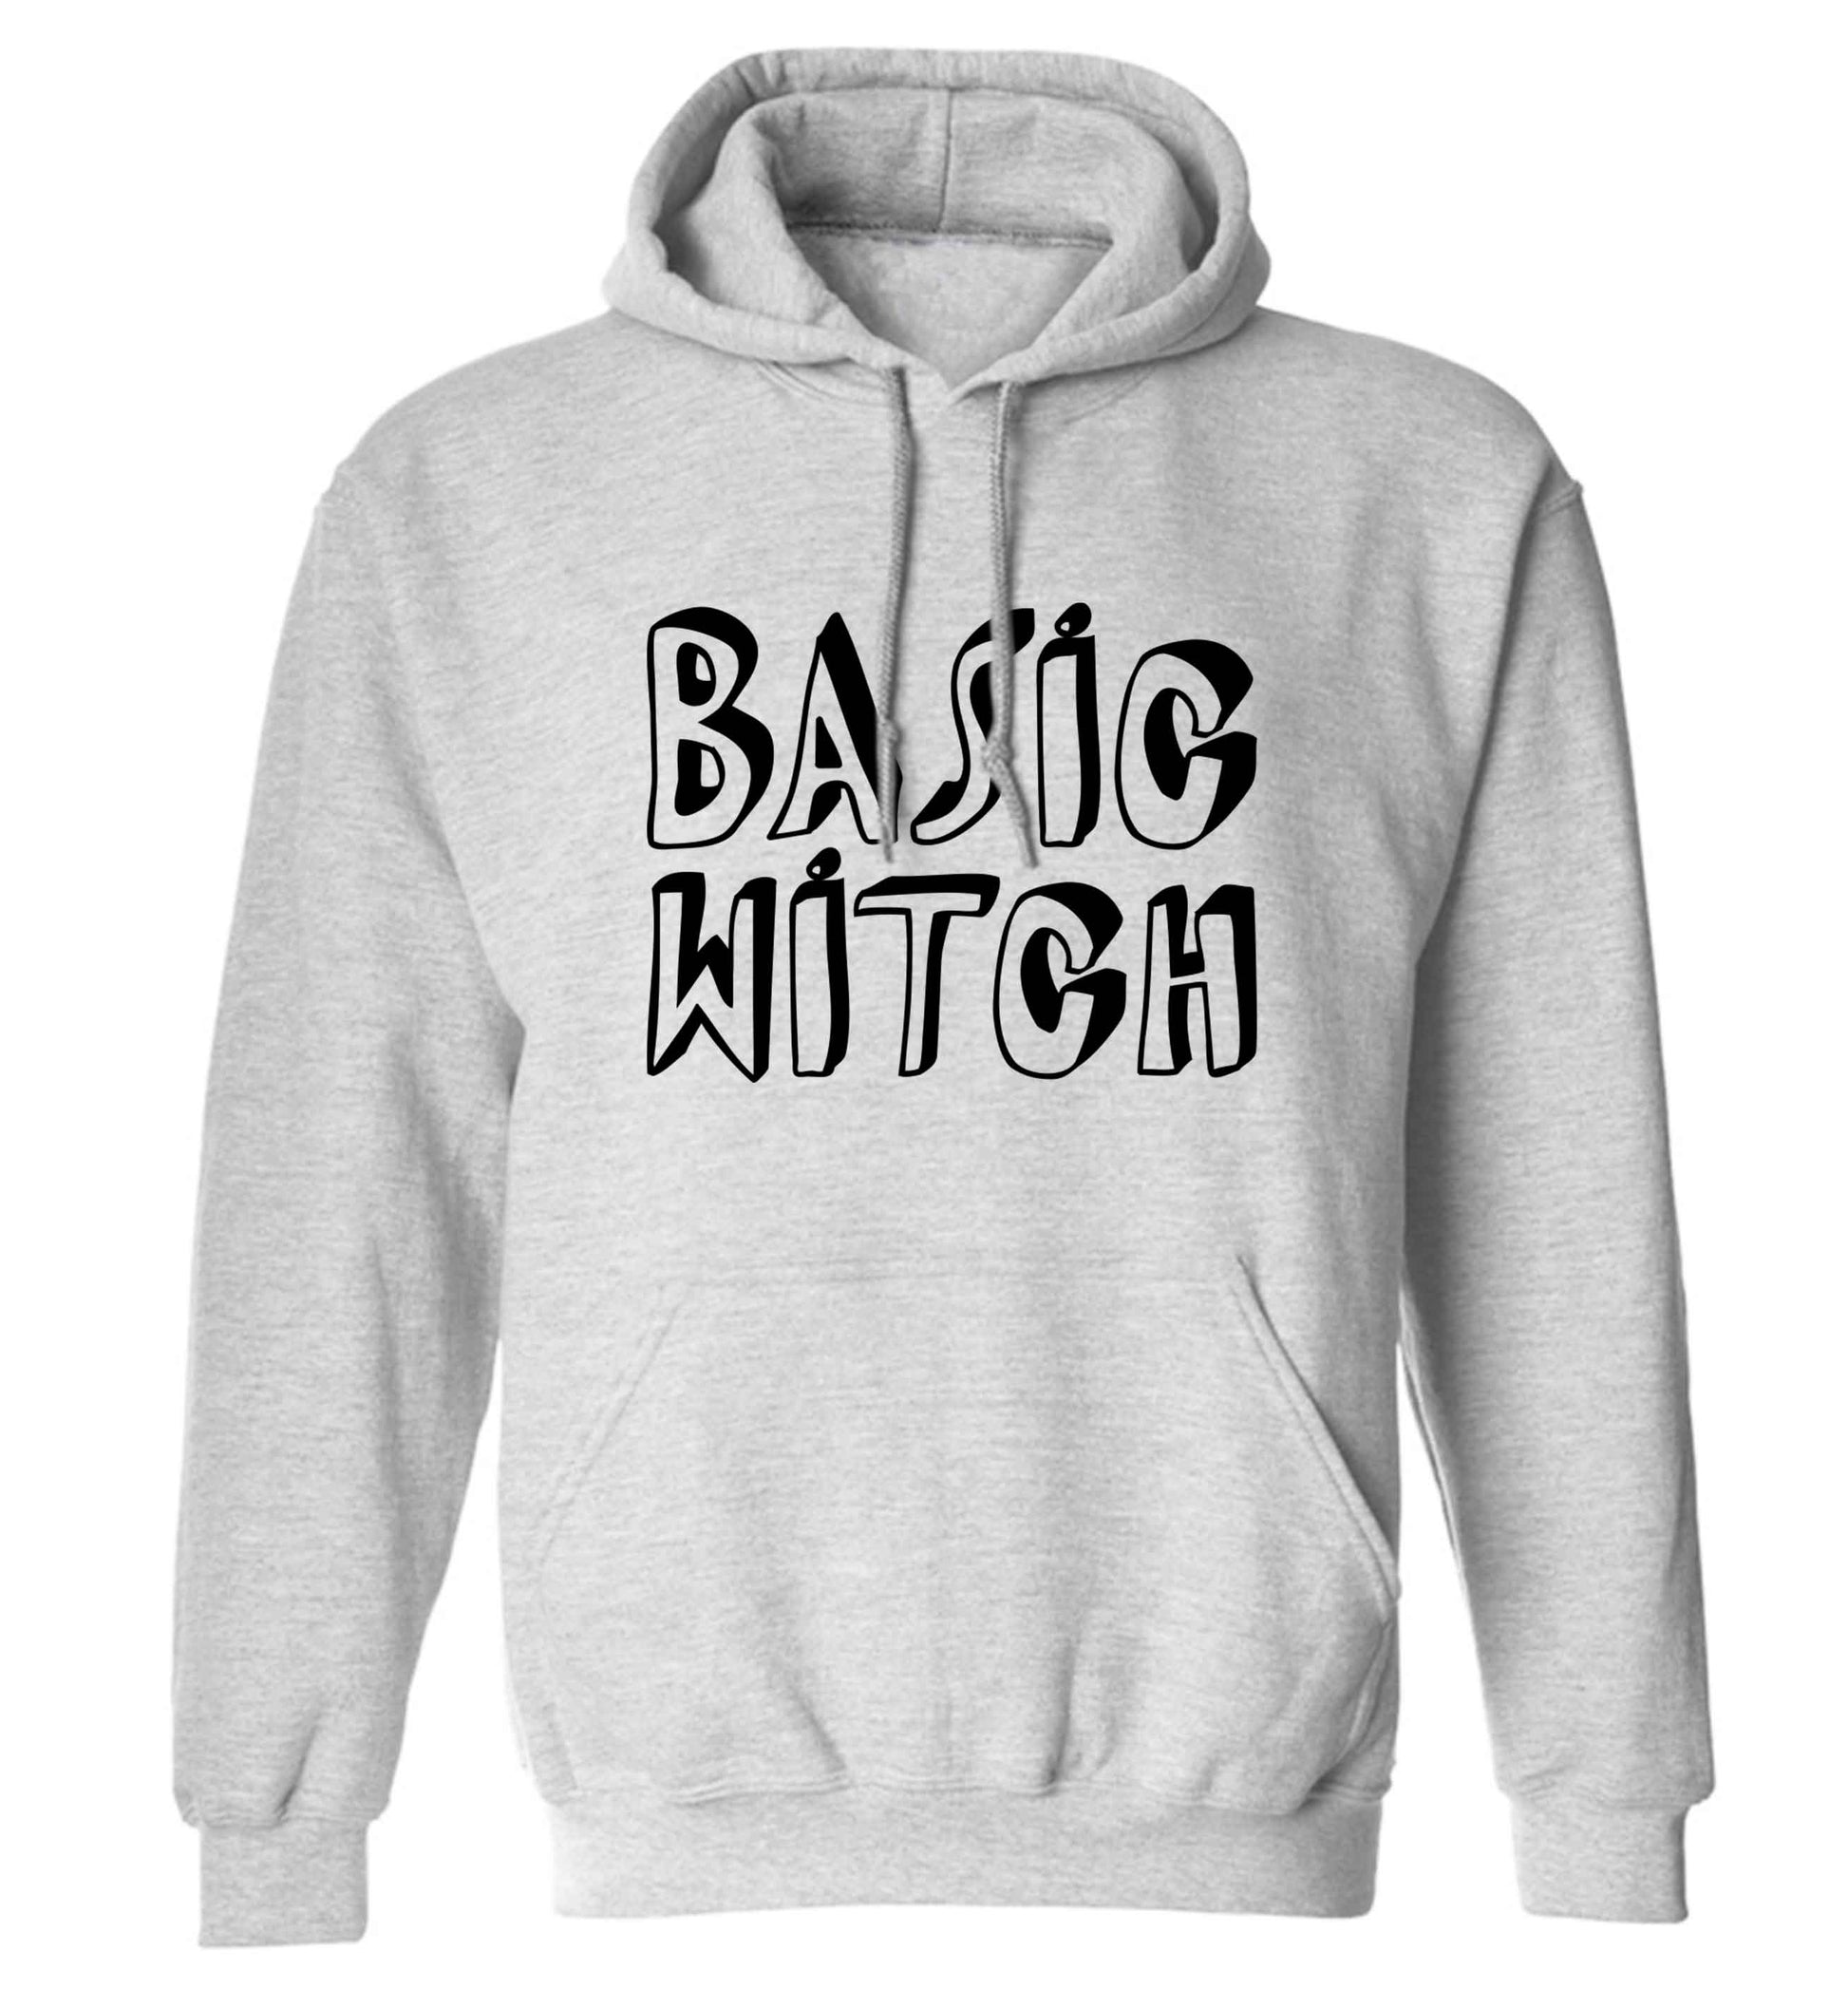 Basic witch adults unisex grey hoodie 2XL